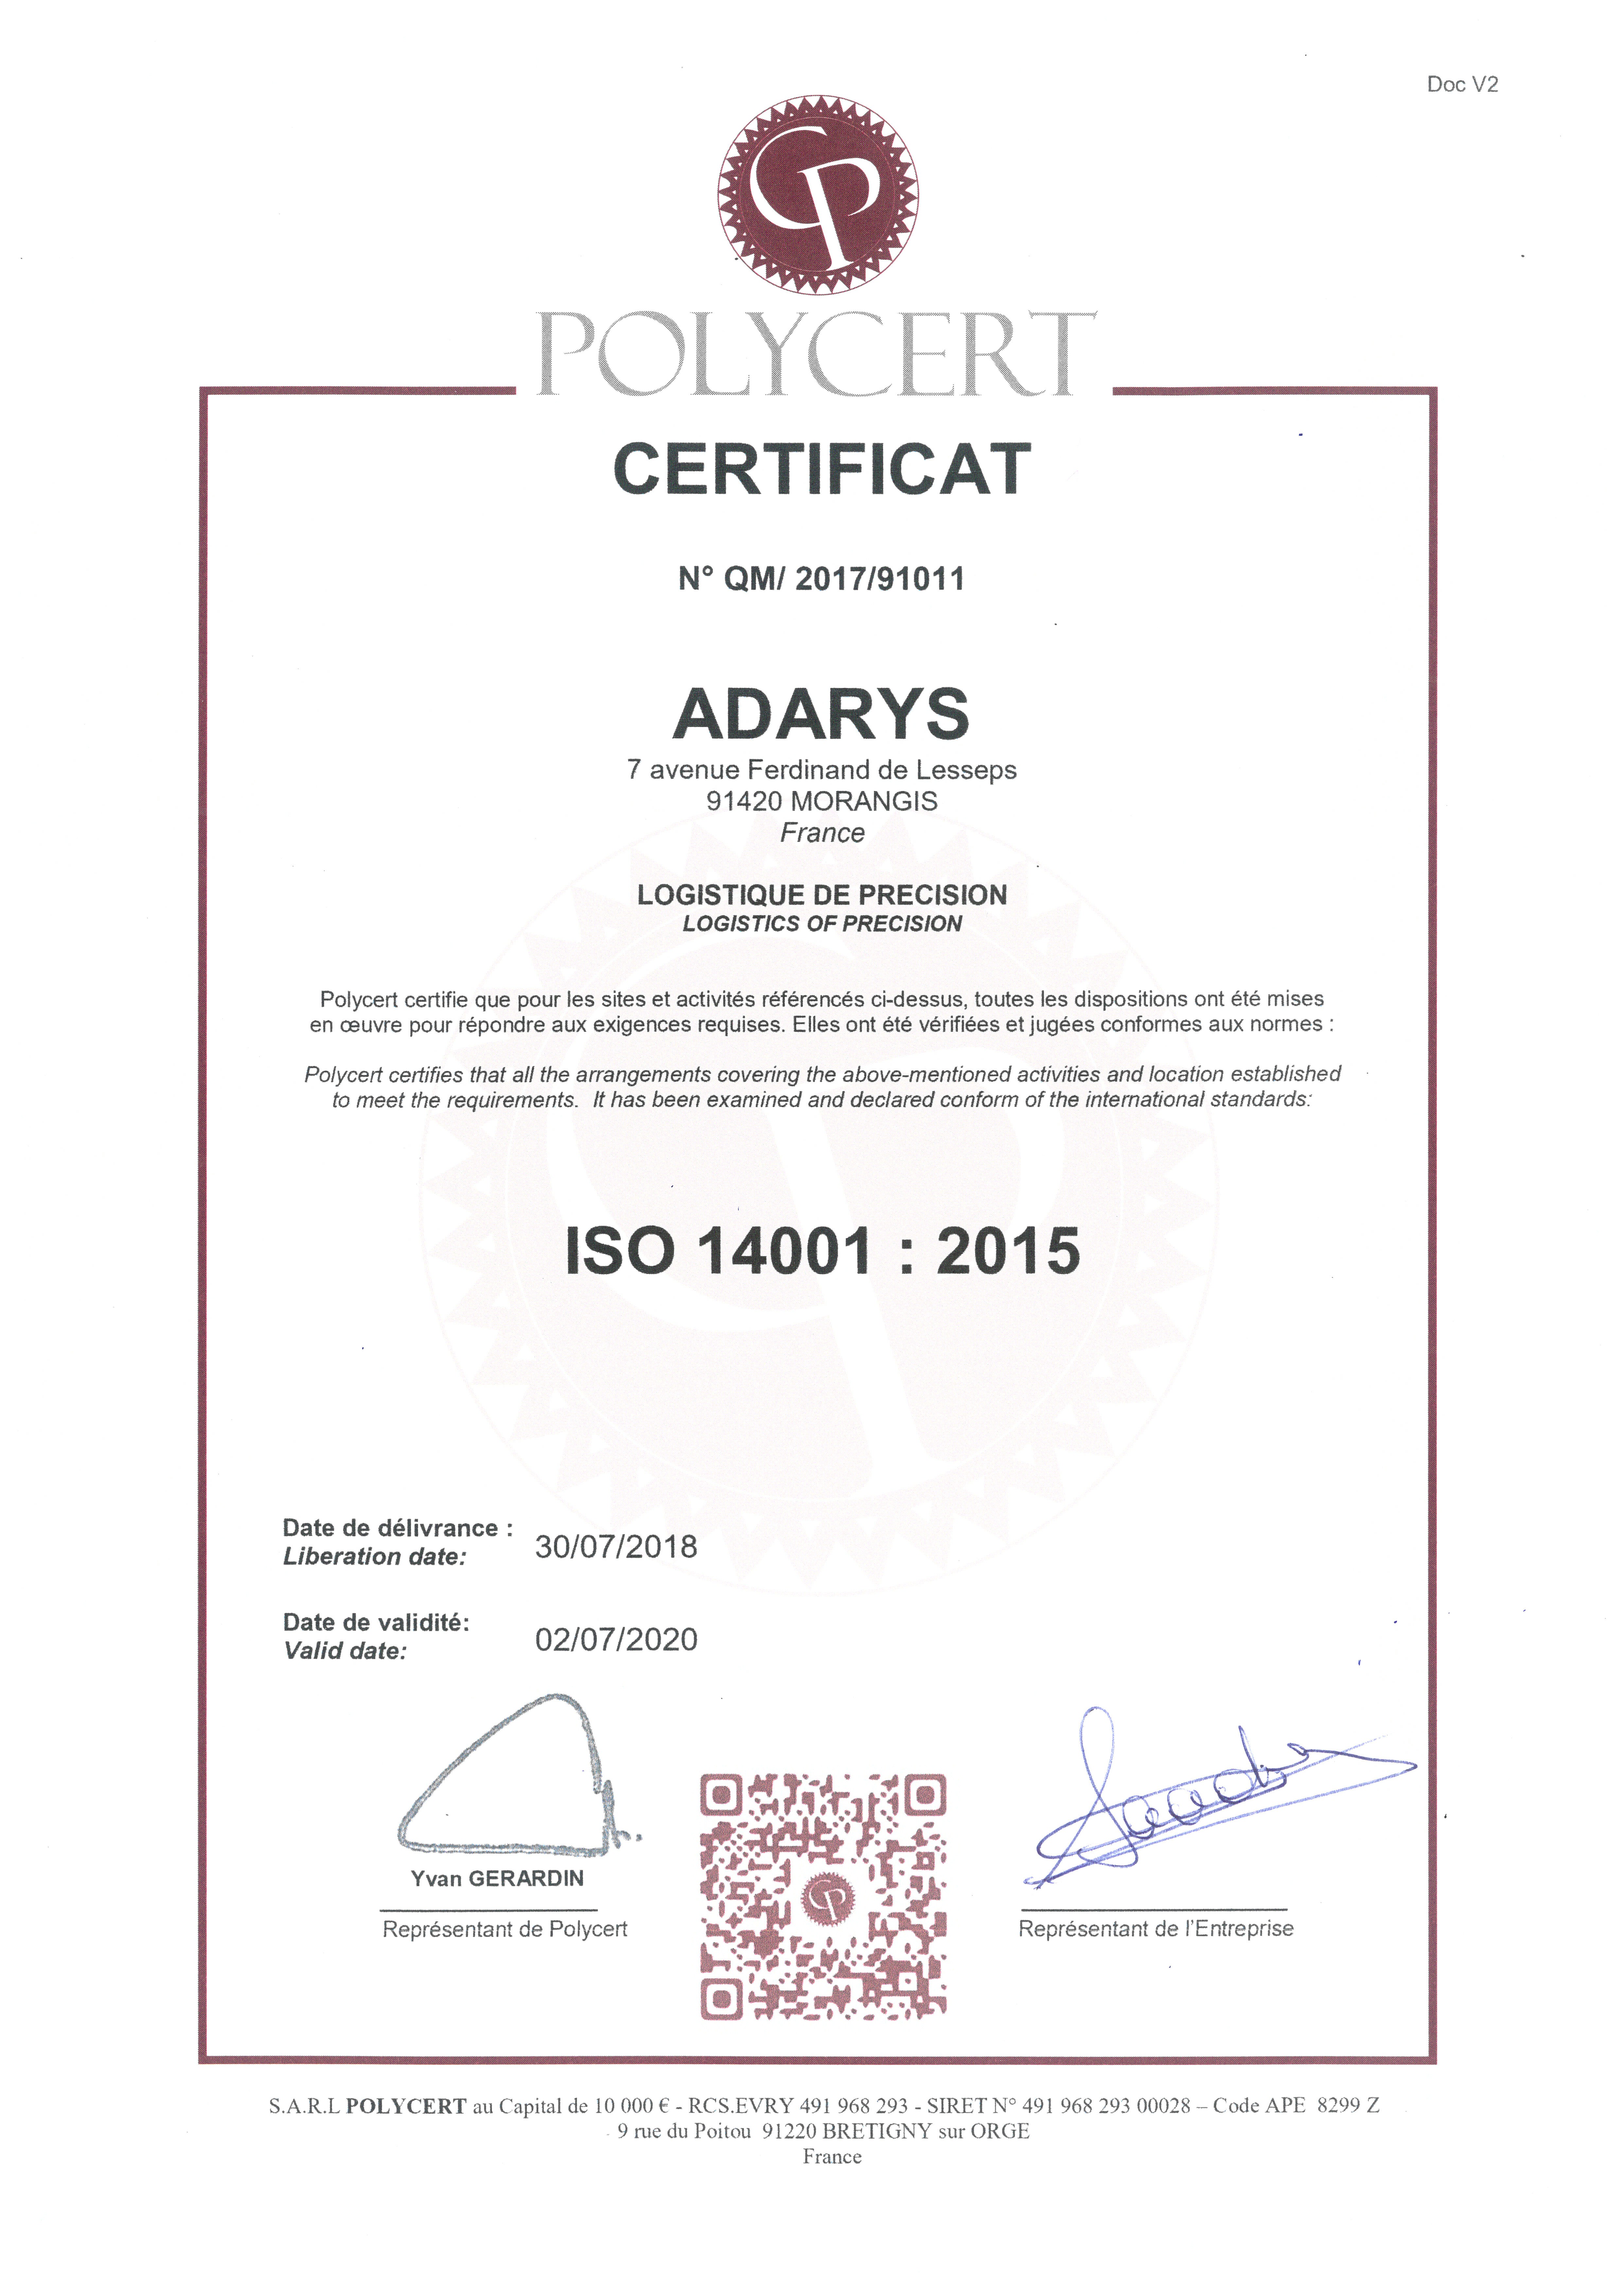 ISO 9001 / ISO 14001